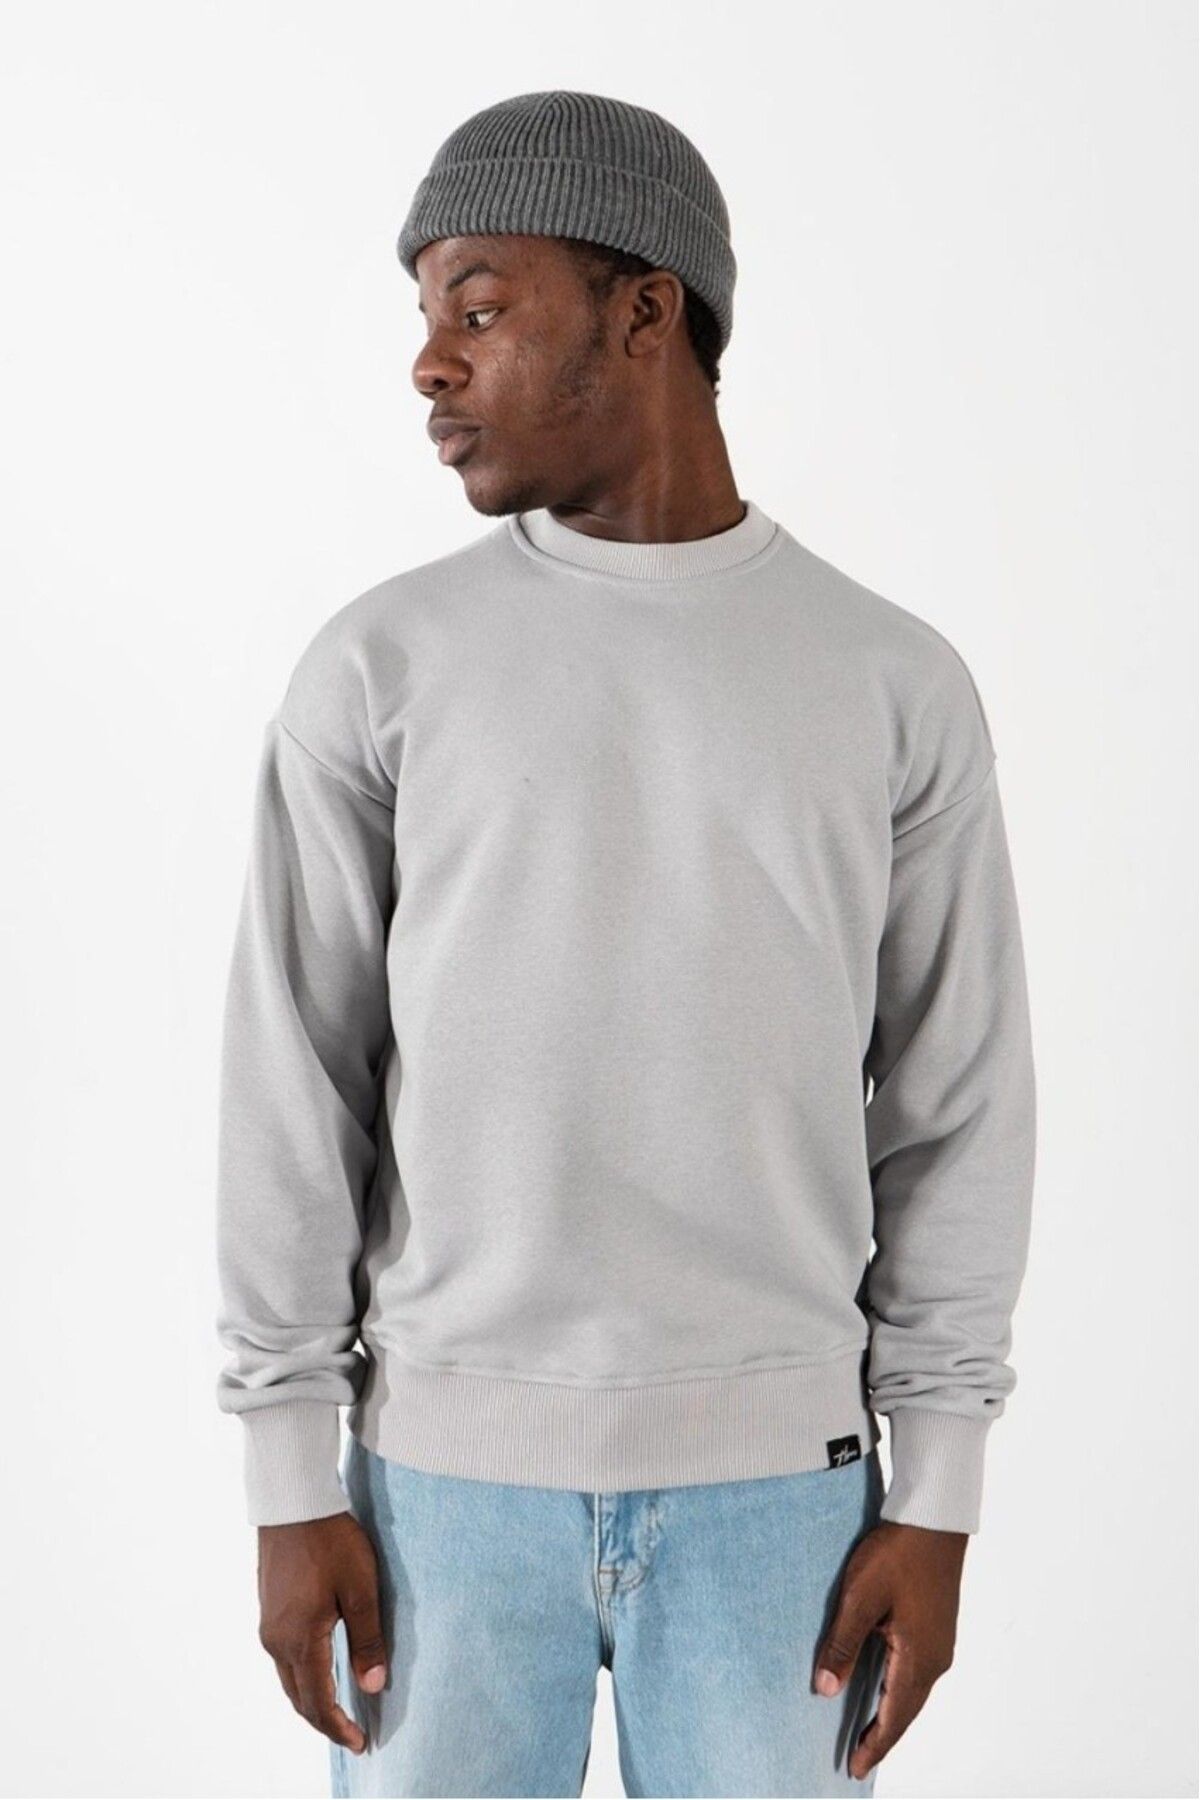 HYPERS Urban Style Erkek Sweatshirt Us1108gr